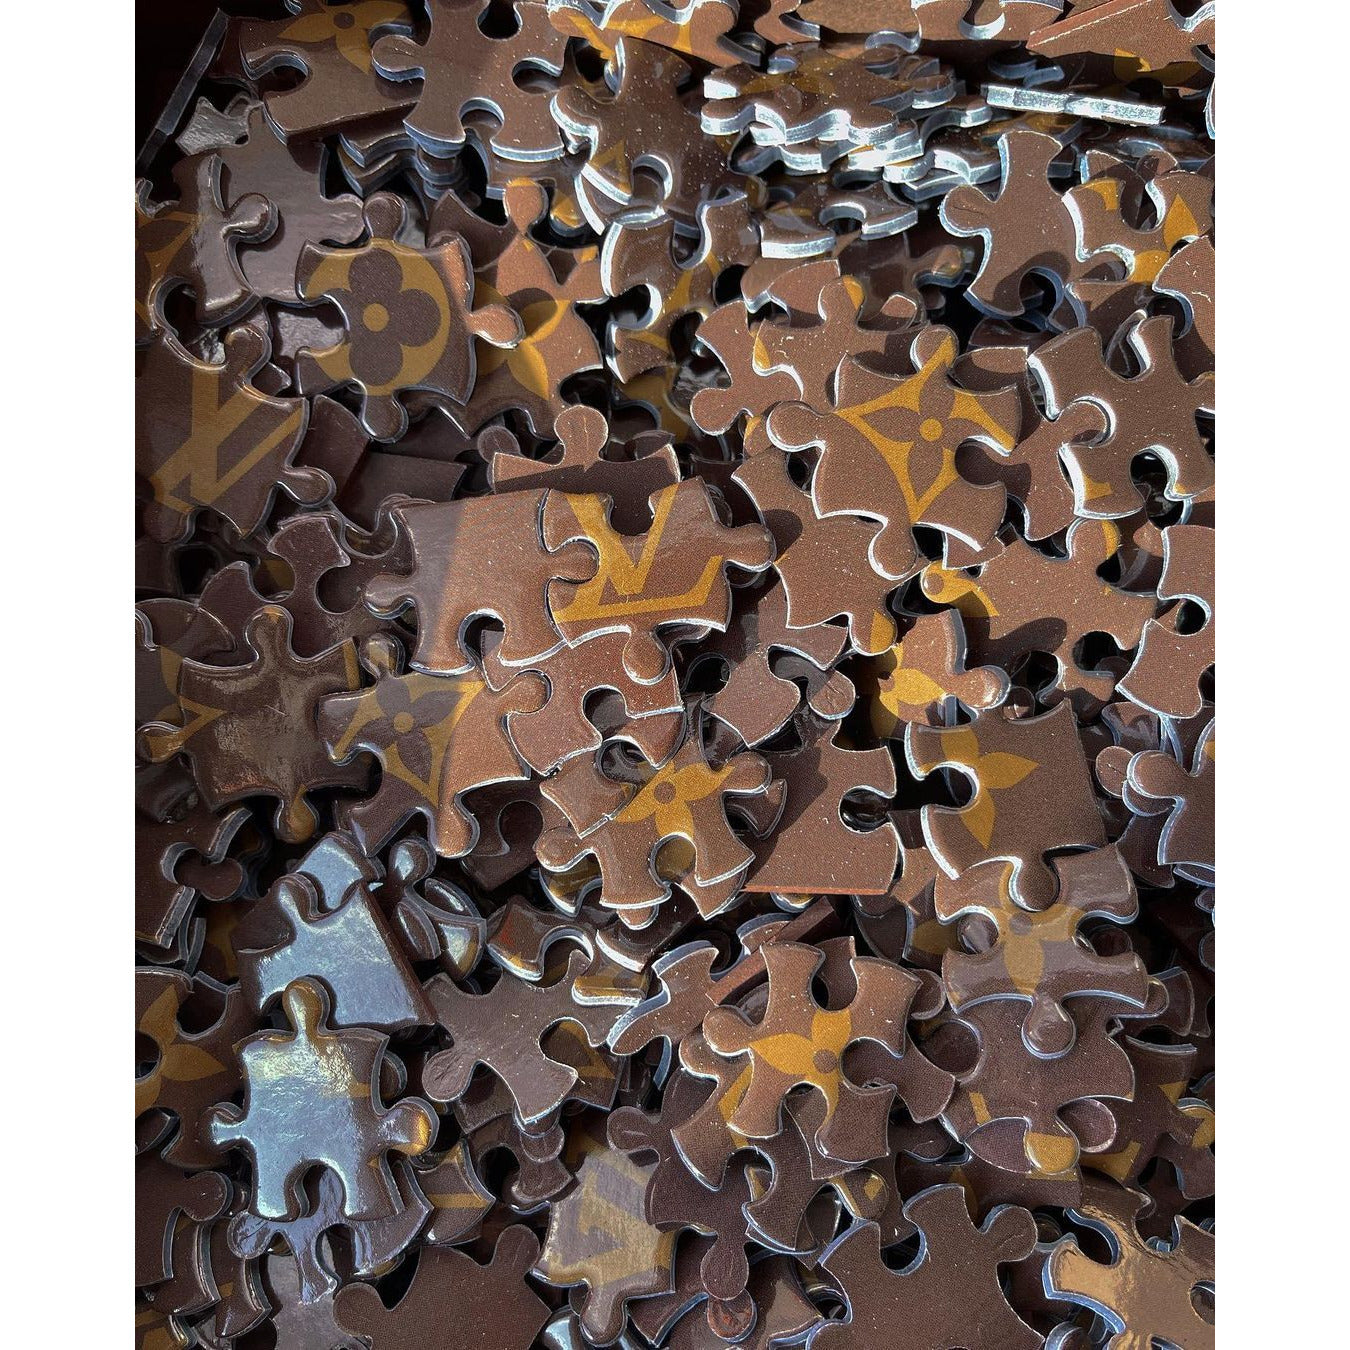 Louis Vuitton Jigsaw Puzzles for Sale